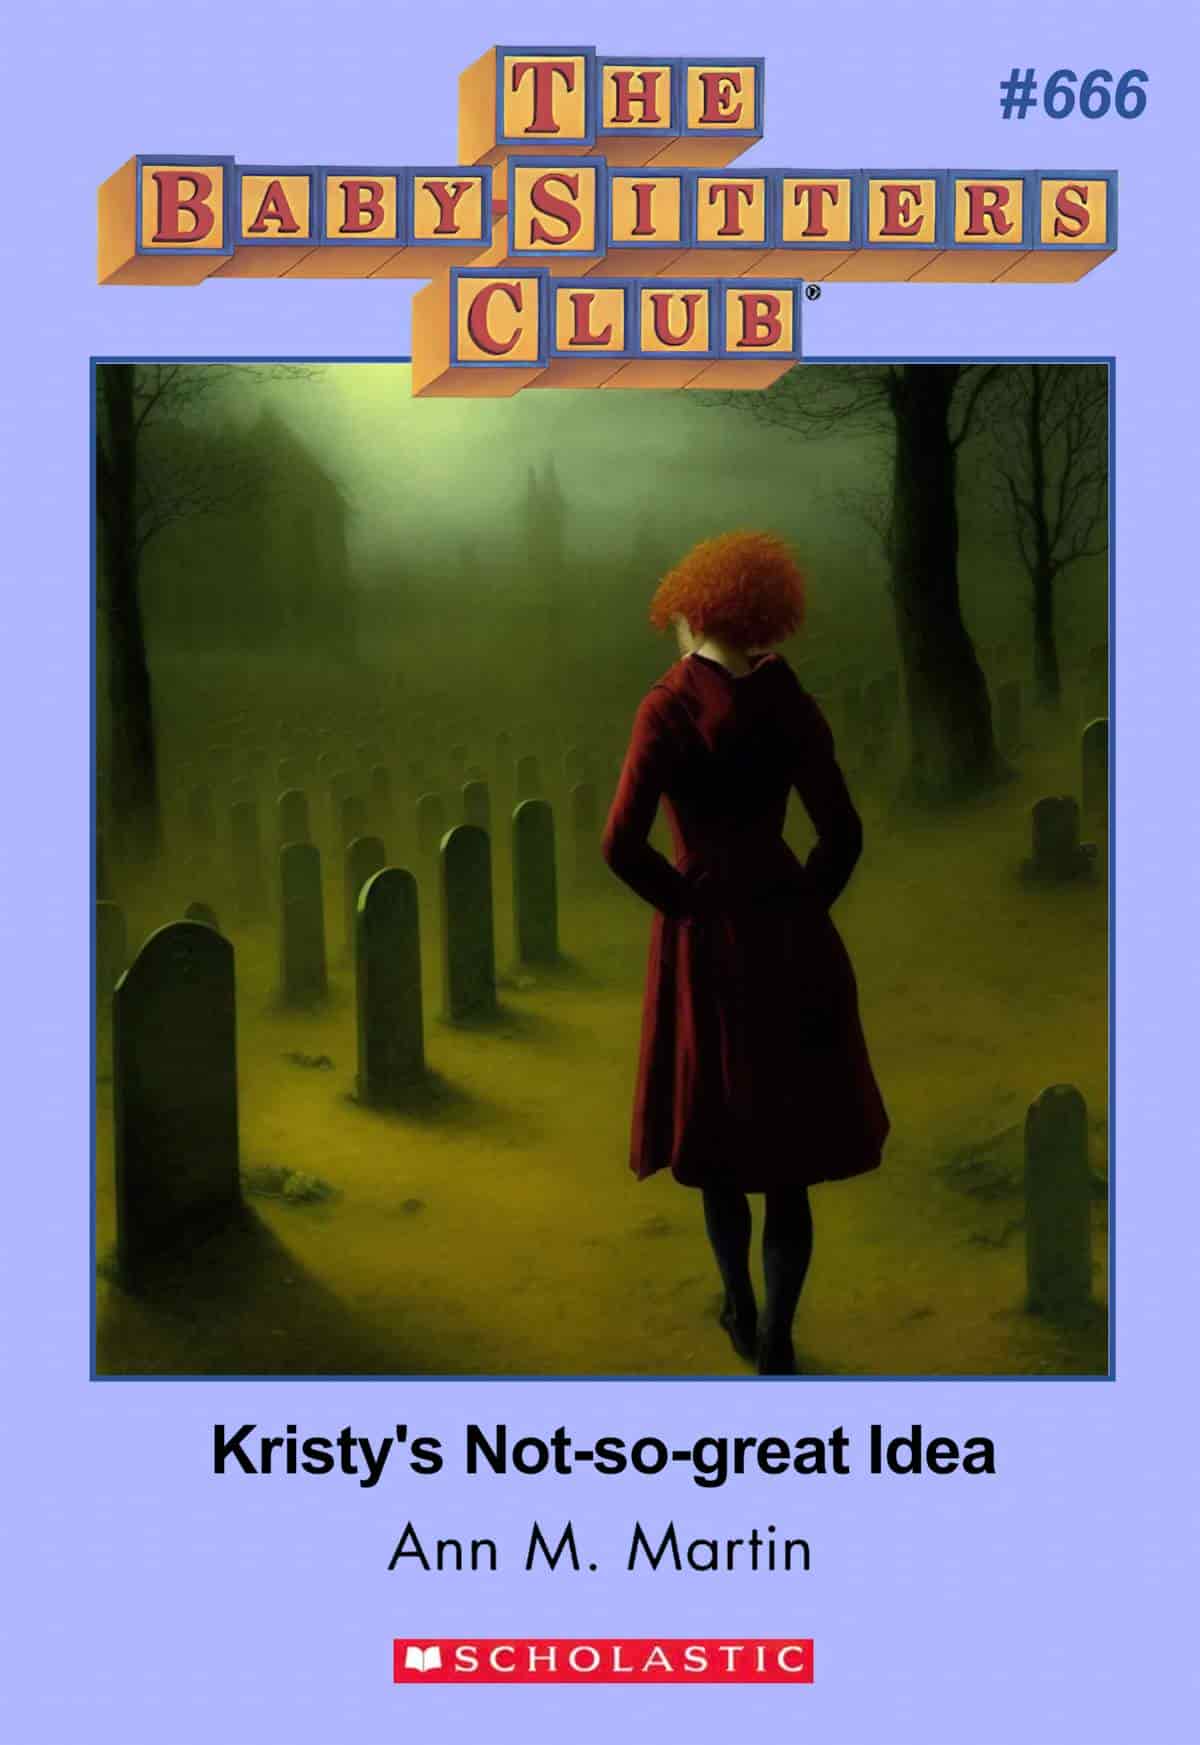 Babysitters Club Kristy's Not-so-great Idea